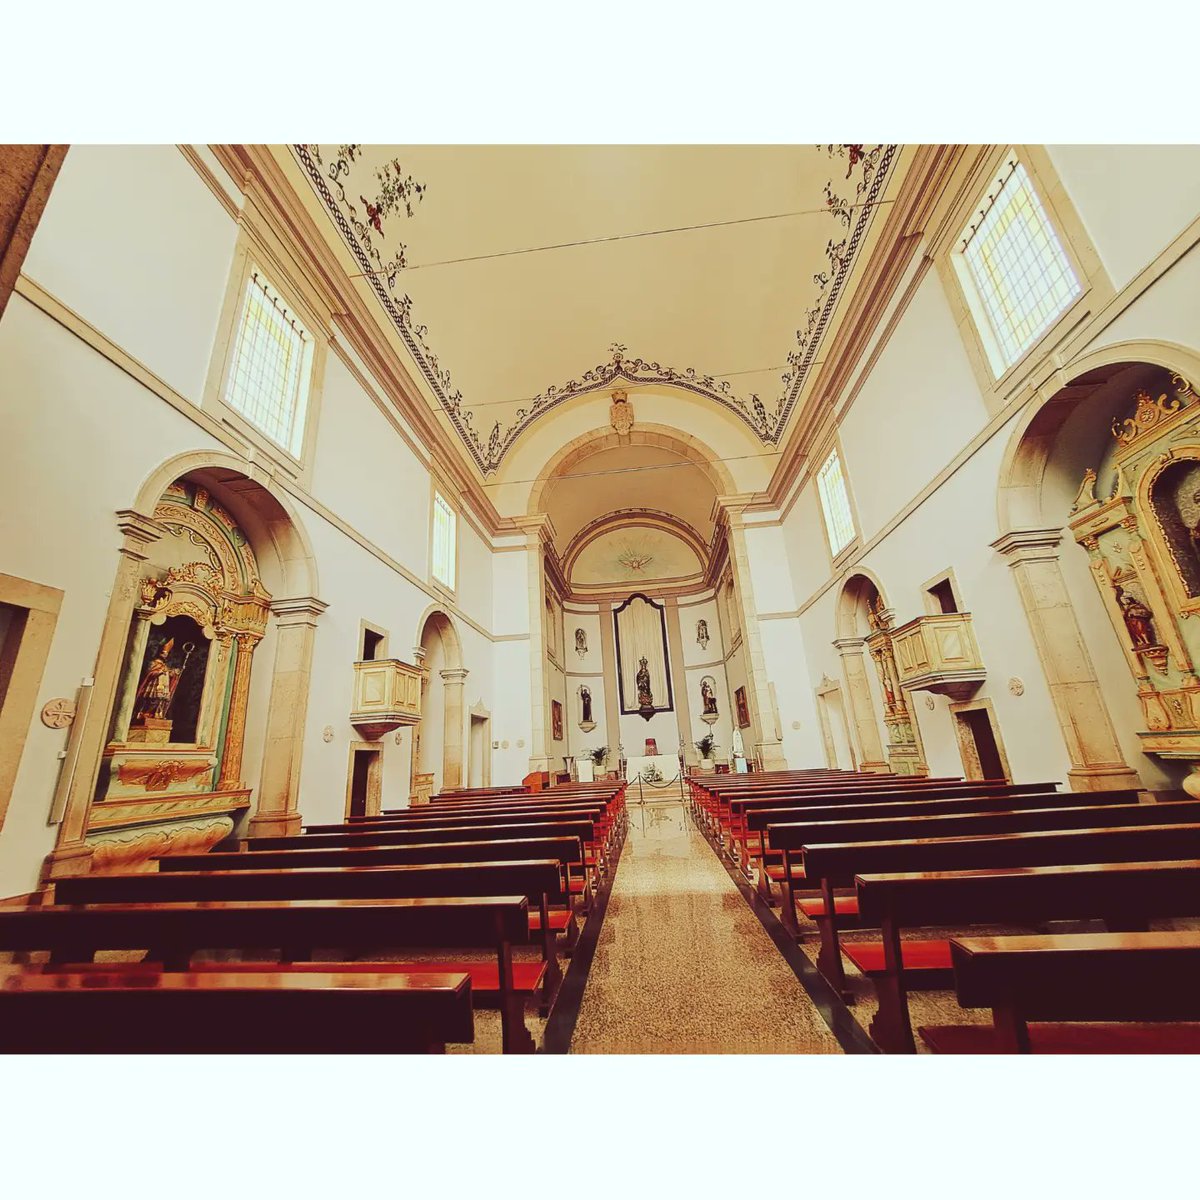 #Church #portugal #algarveportugal #albufeira #photography #portugalphotography #europe #europetravel #photographer #travelphotography #photo